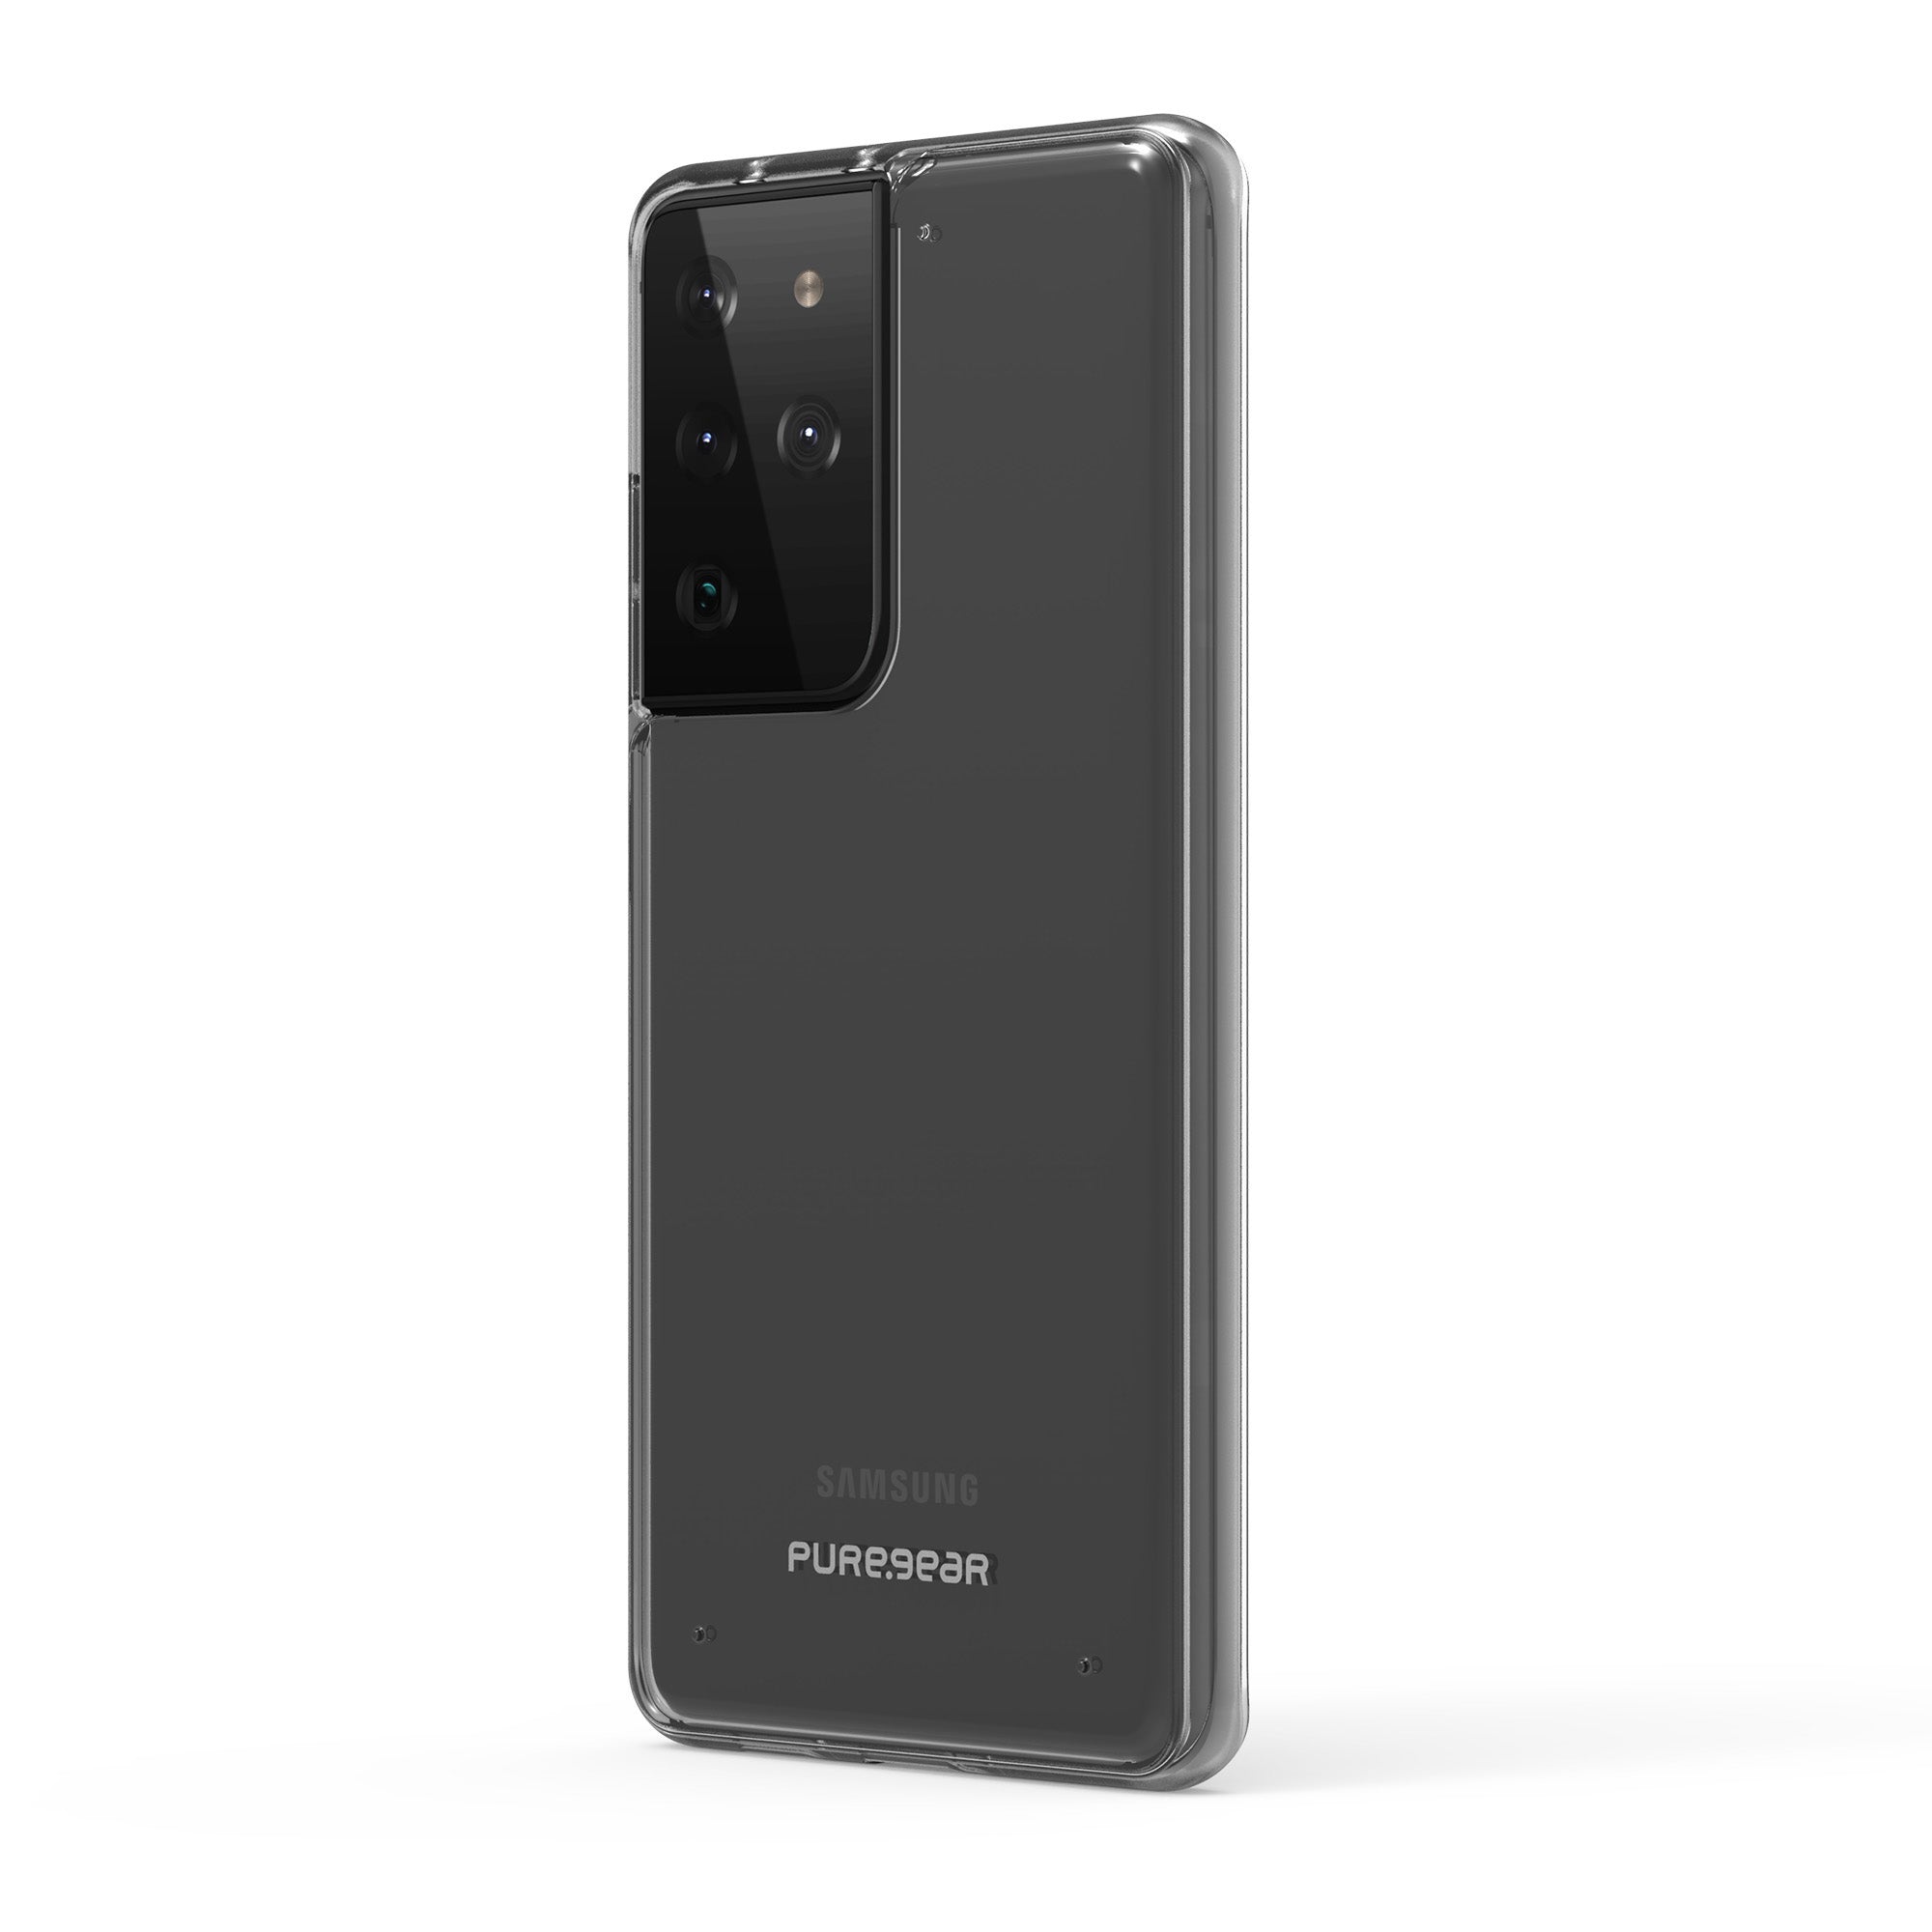 PureGear Samsung Galaxy S21 Ultra 5G Clear Slim Shell Case w/Anti-ing Coating